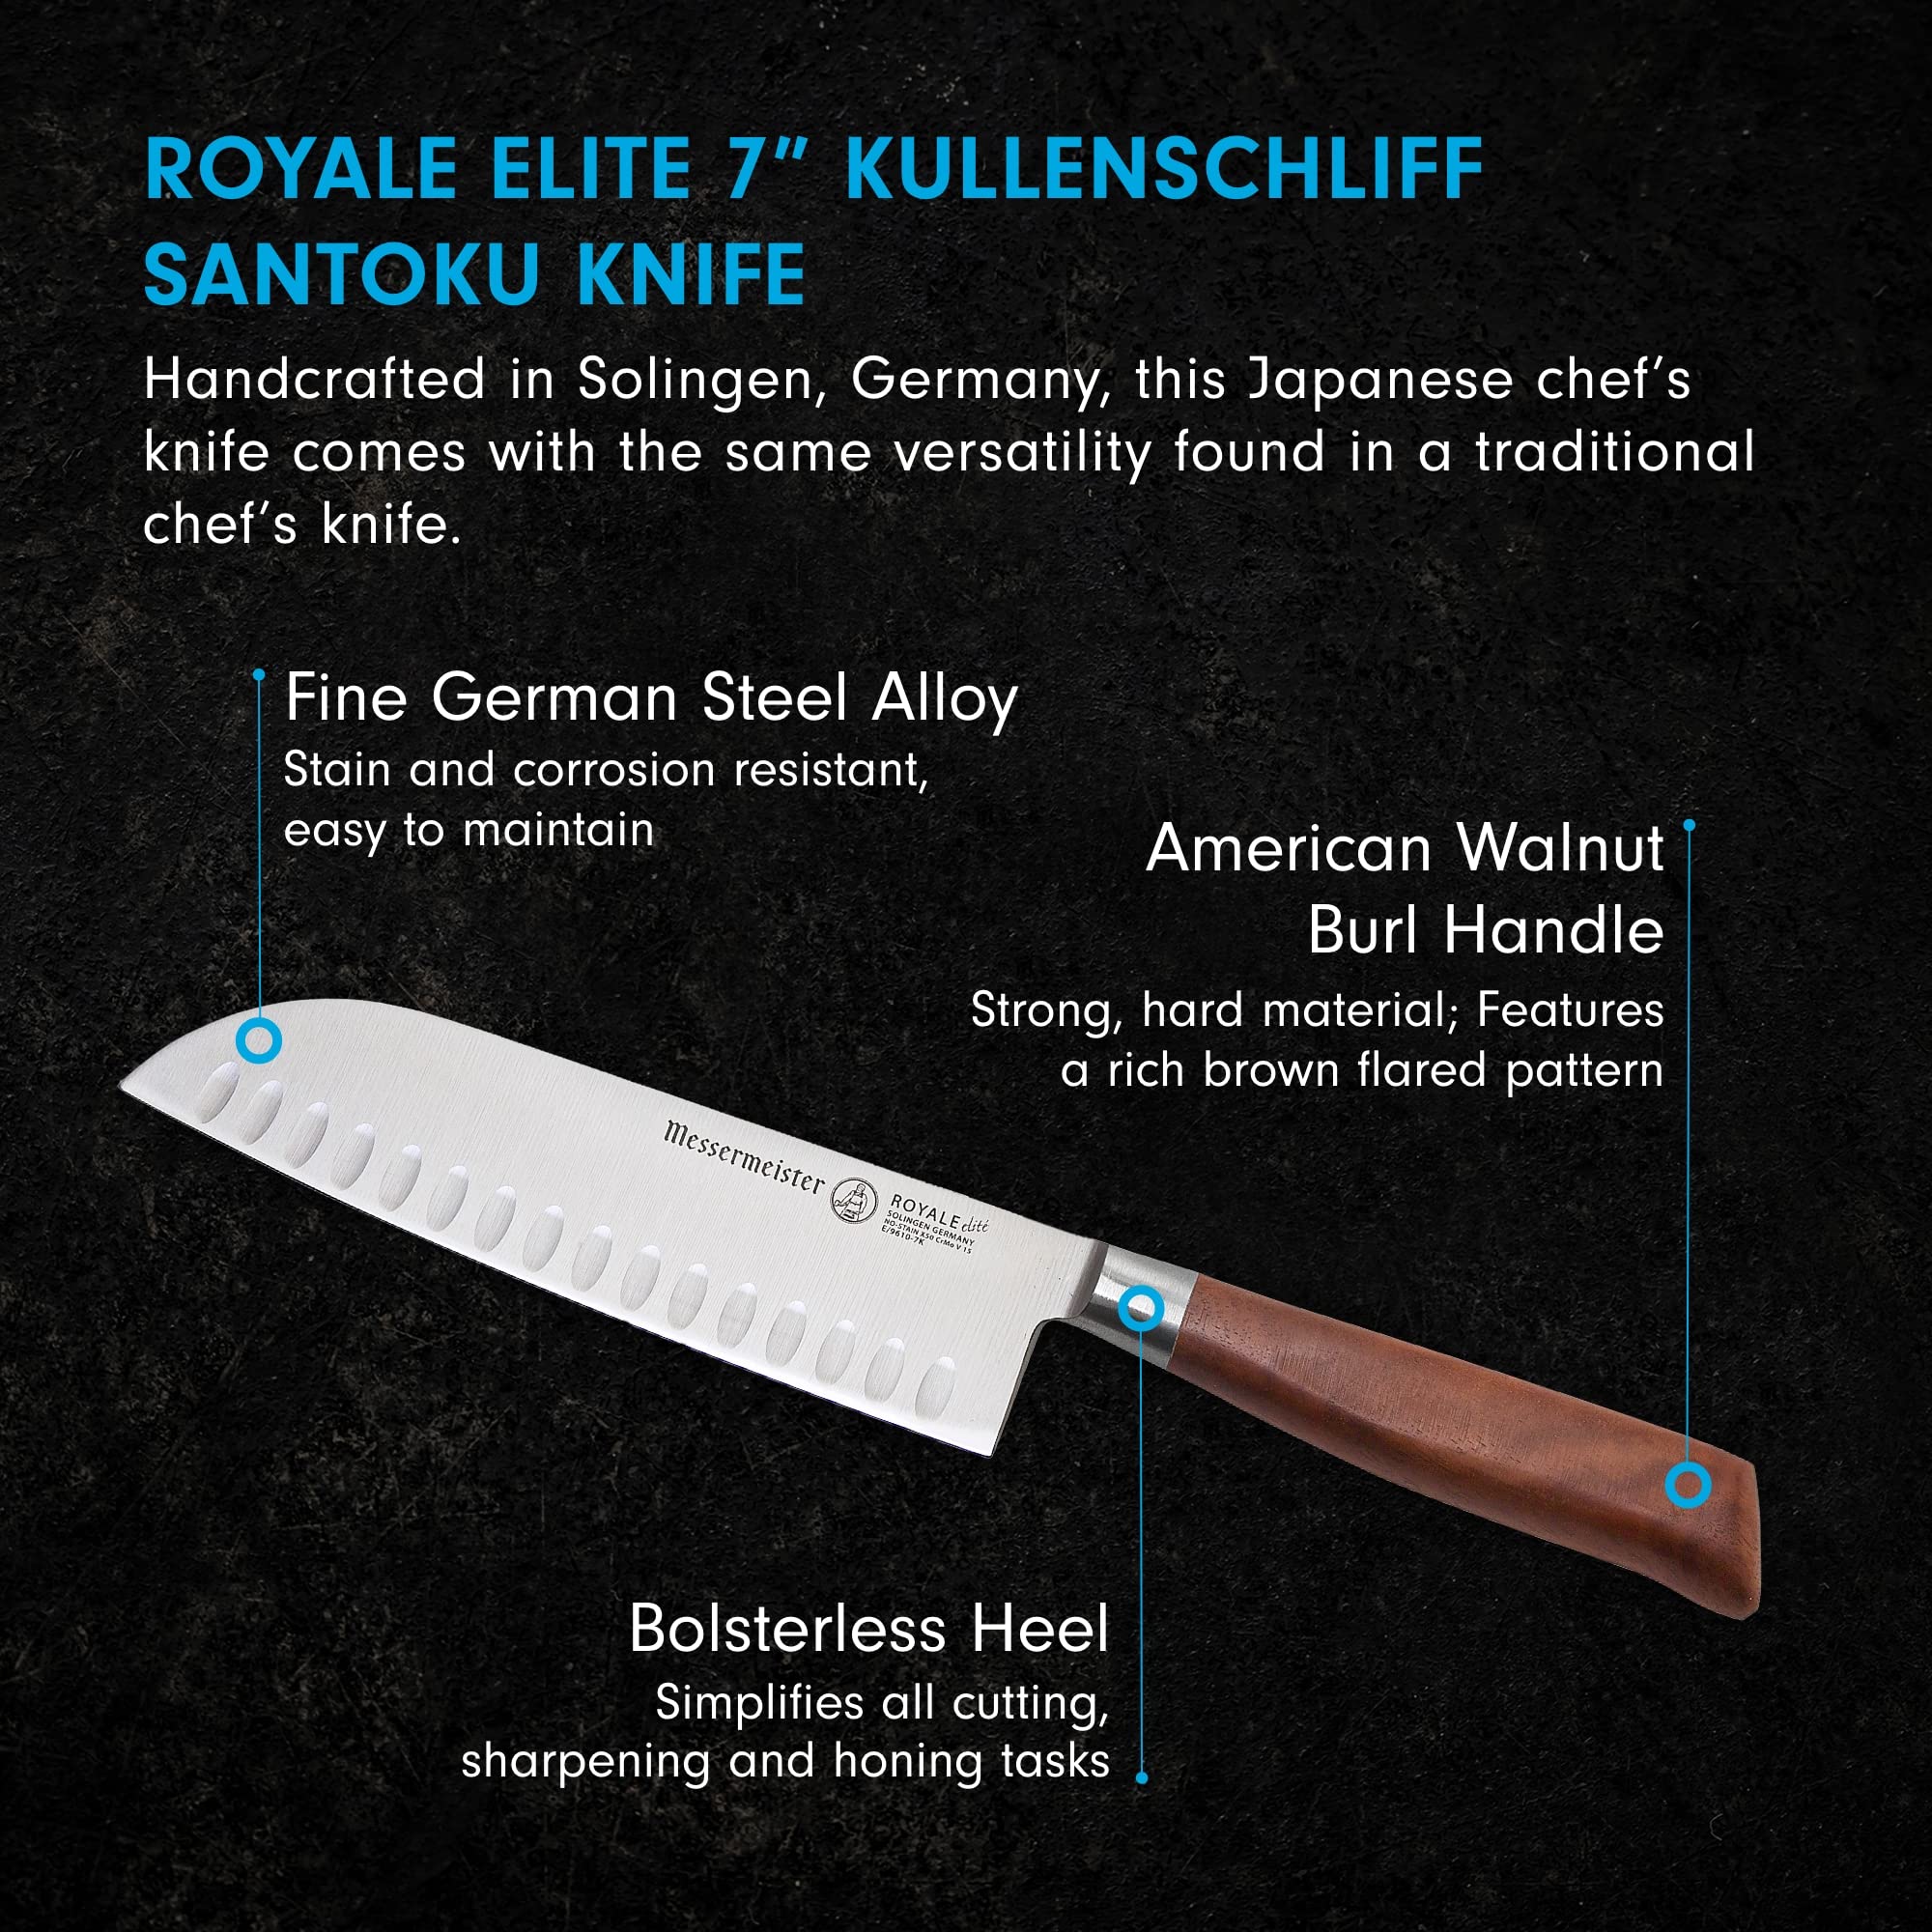 Messermeister Royale Elite 7” Kullenschliff Santoku Knife - Japanese Chef’s Knife - Stainless Steel & American Walnut Burl Handle - Rust Resistant & Easy to Maintain